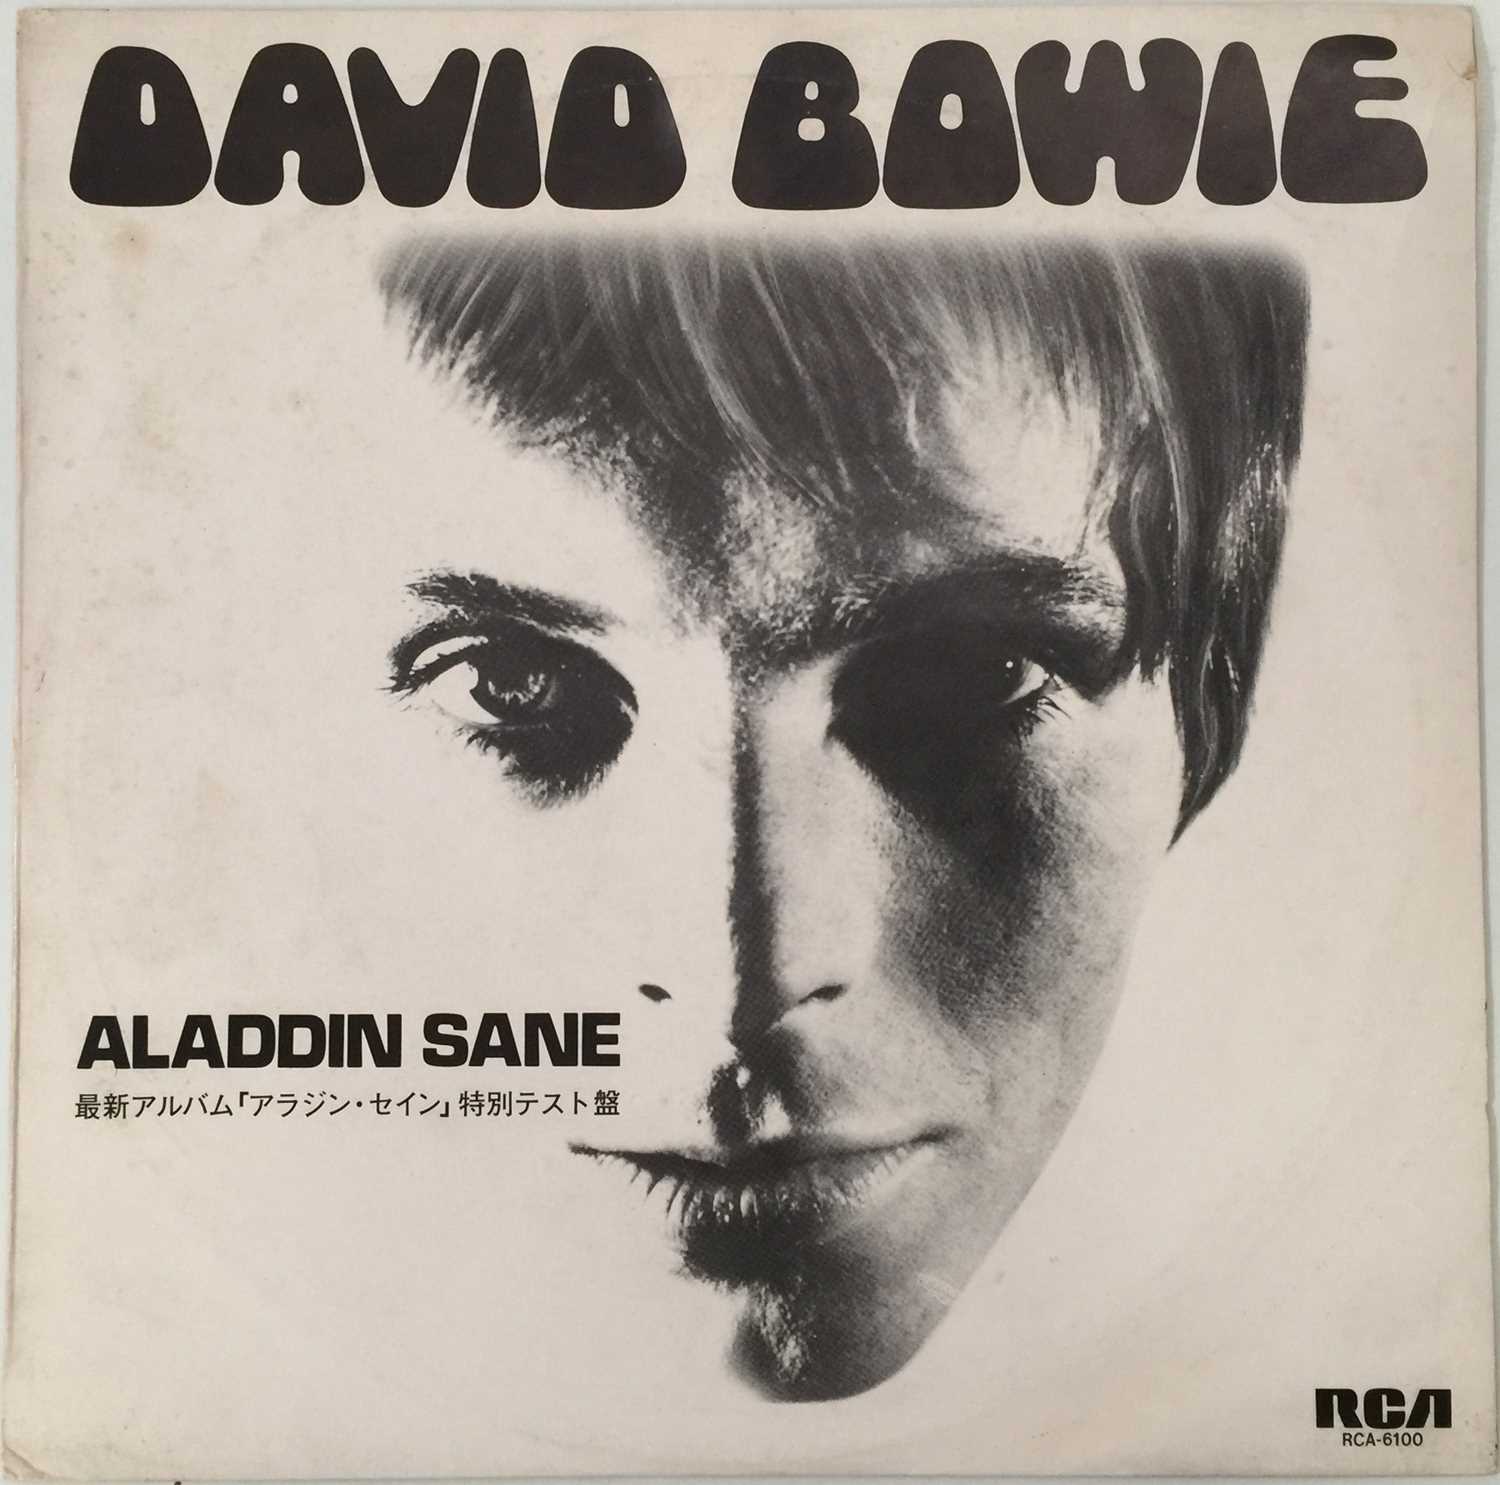 DAVID BOWIE - ALADDIN SANE LP (JAPANESE PROMO - RCA-6100) - Image 2 of 5